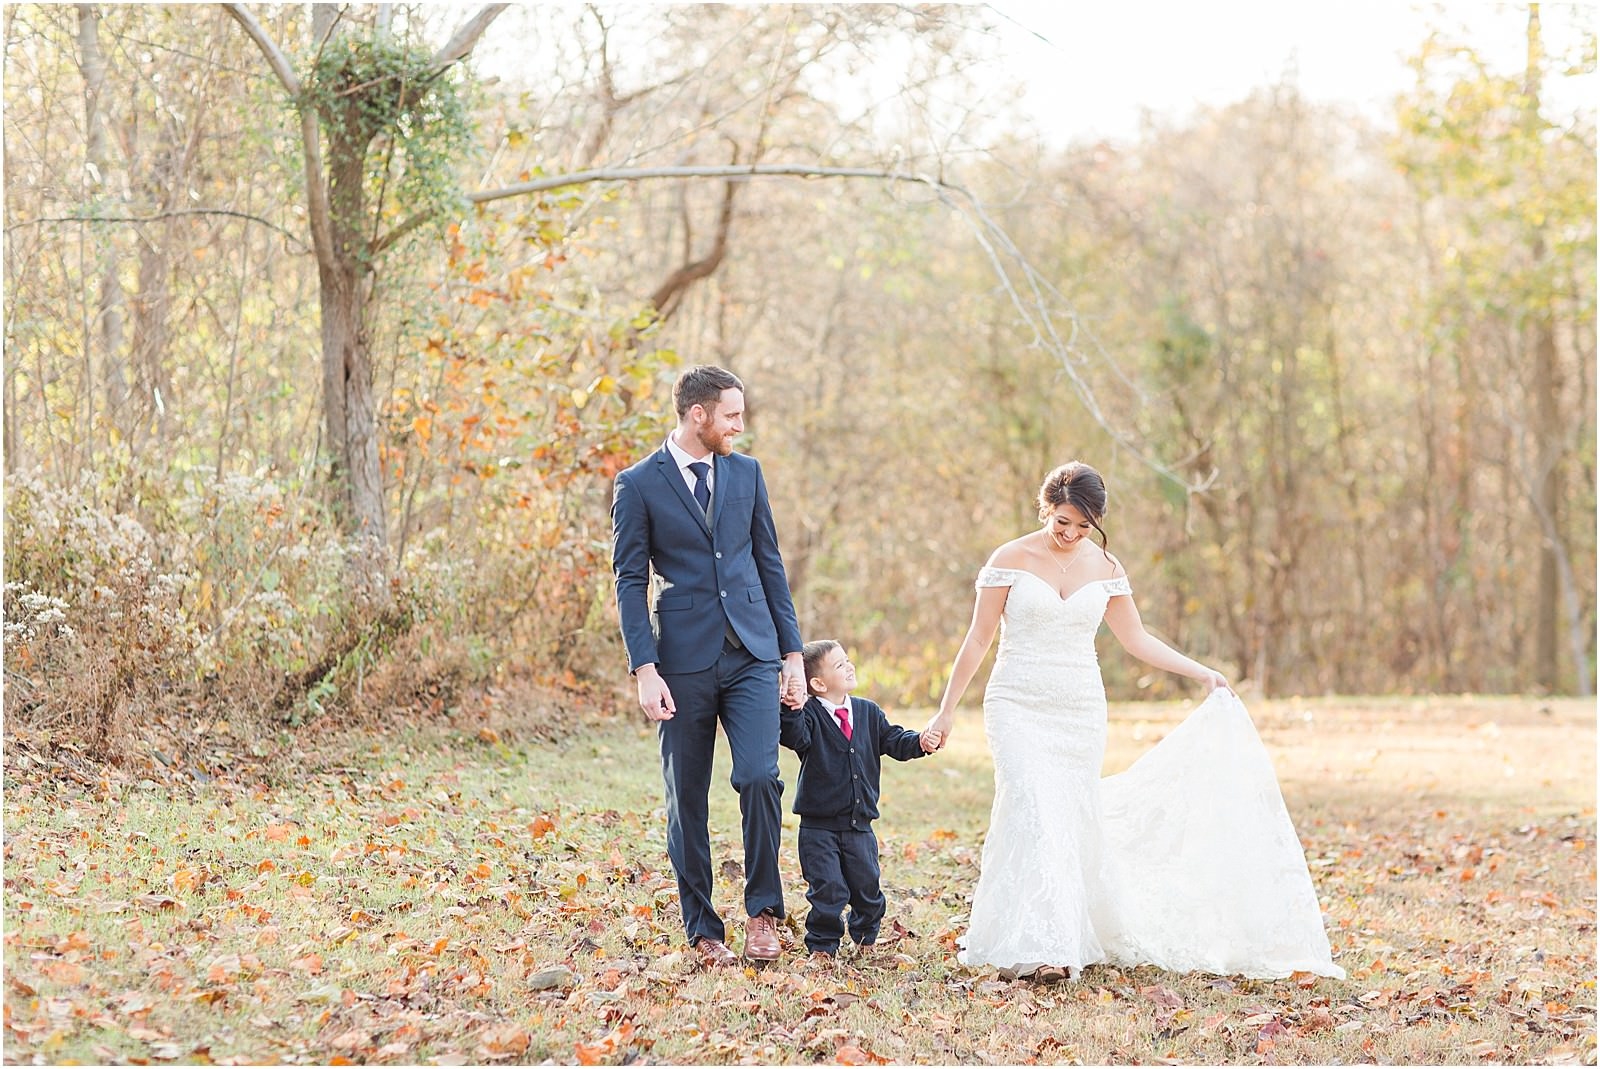 Walker and Alyssa's intimate fall wedding in Southern Indiana. | Wedding Photography | The Corner House Wedding | Southern Indiana Wedding | #fallwedding #intimatewedding | 054.jpg